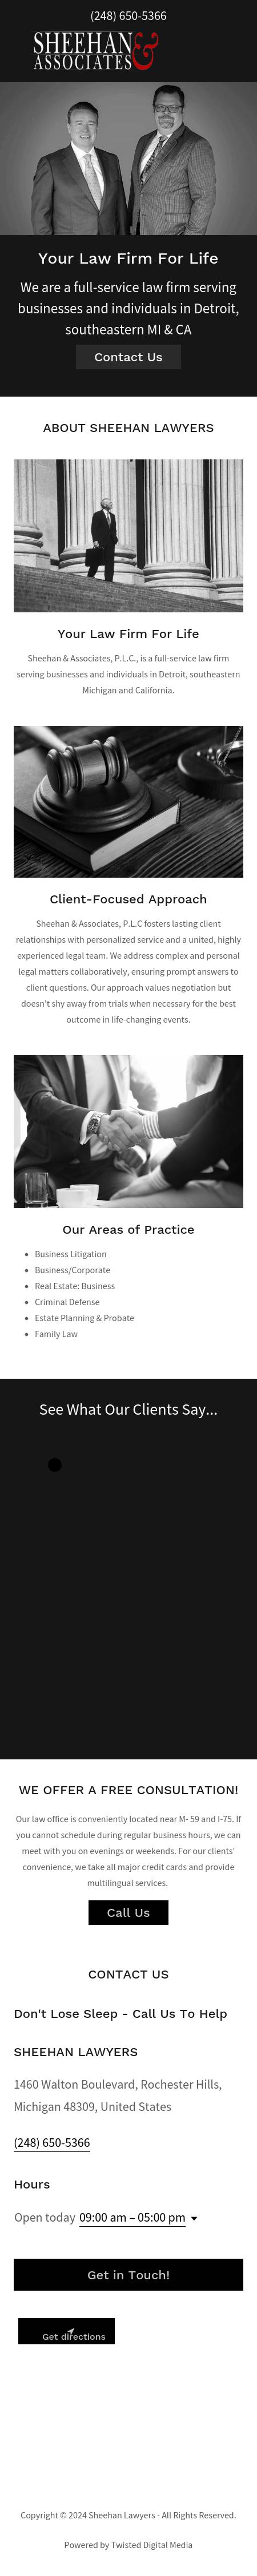 Sheehan & Associates, P.L.C. - Rochester Hills MI Lawyers